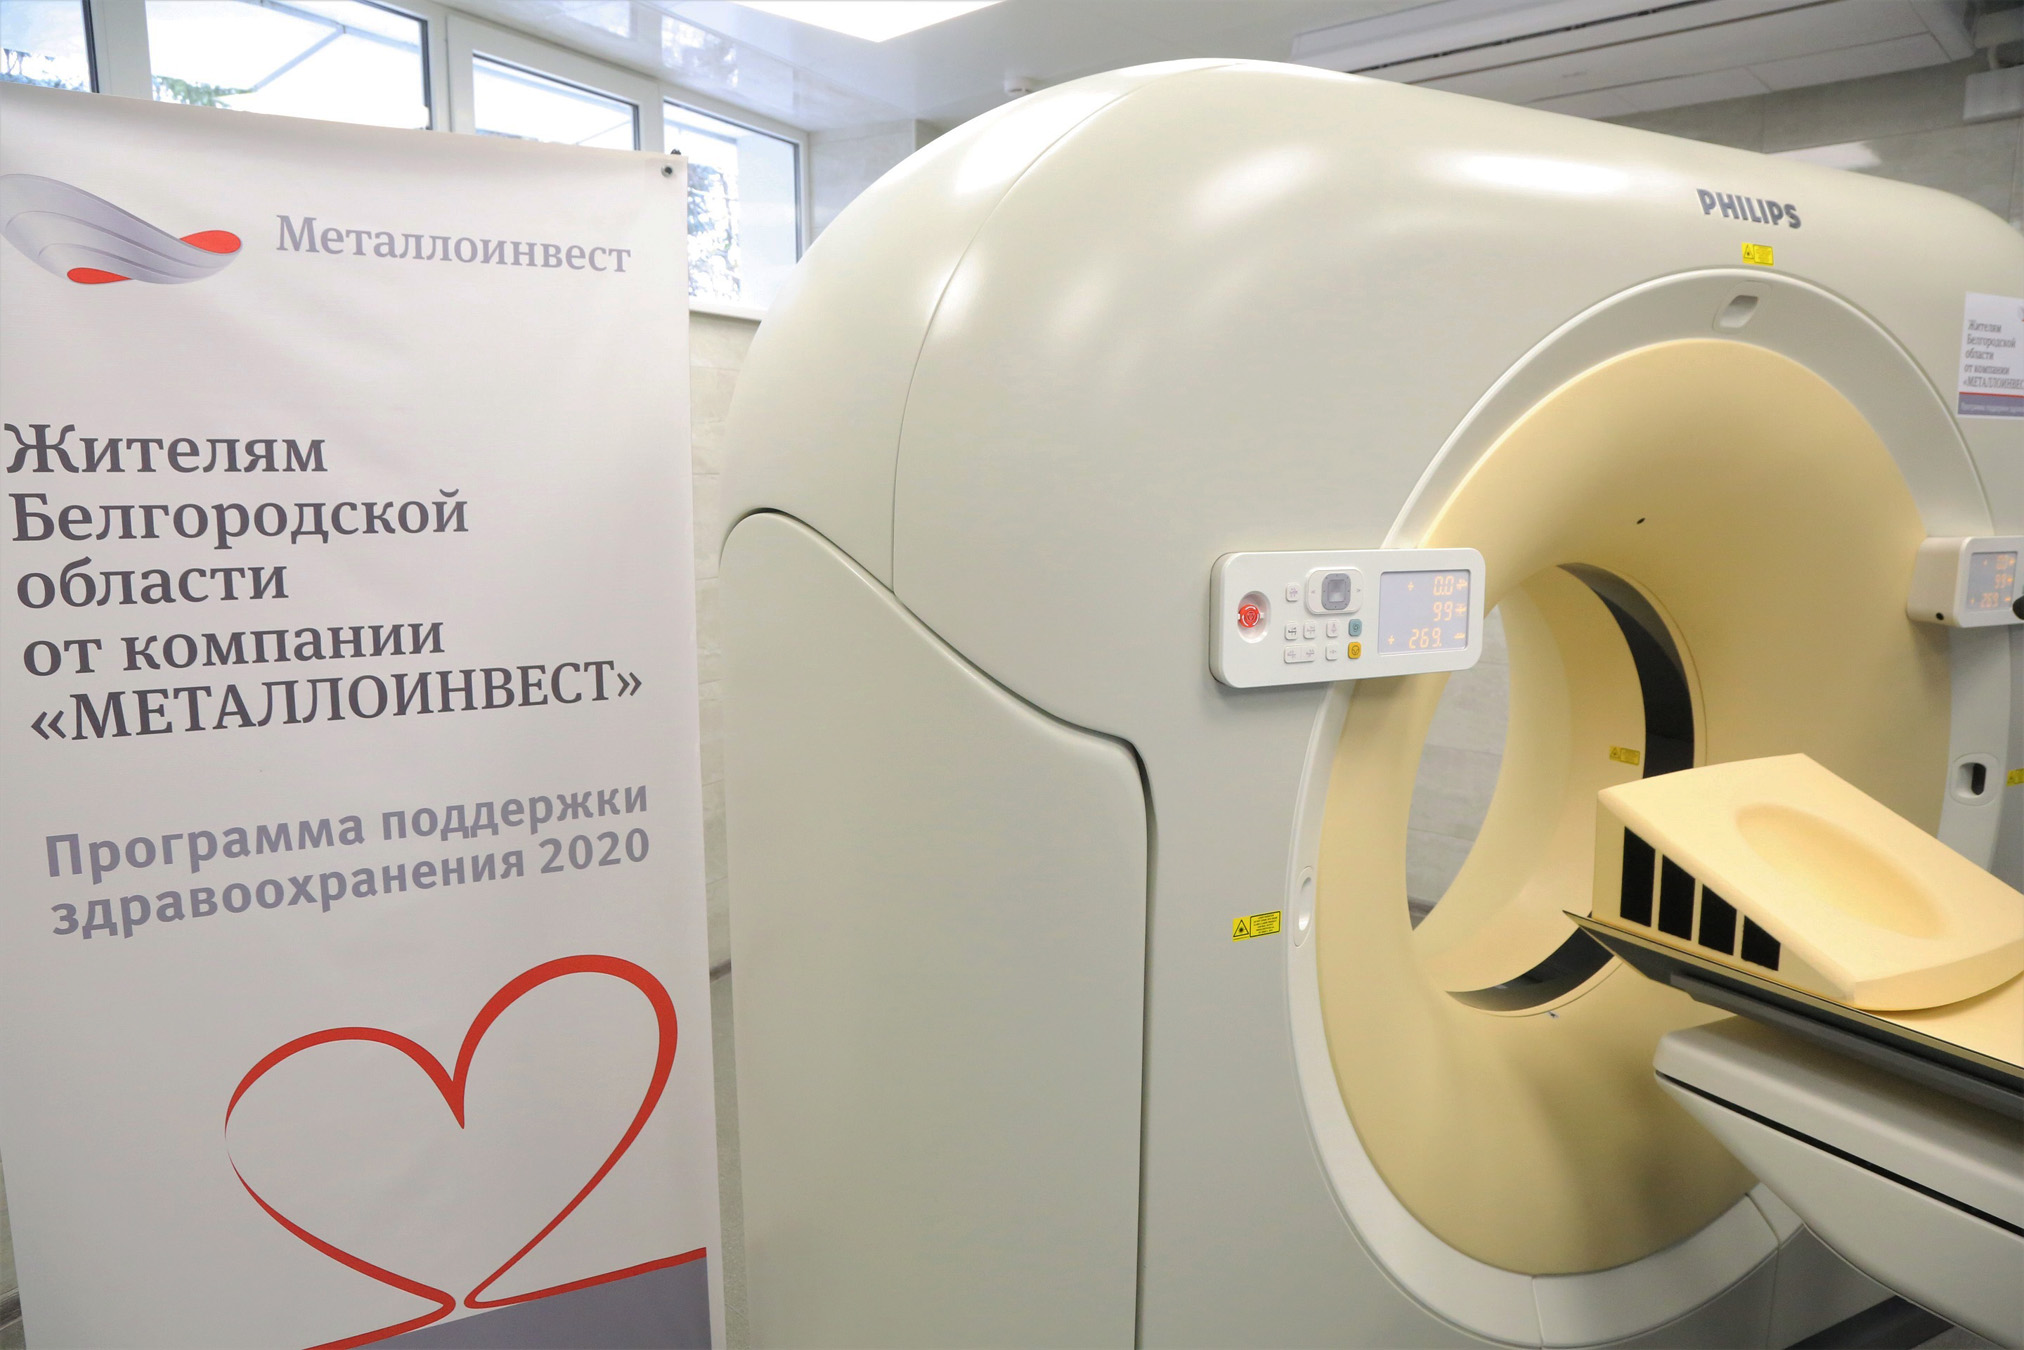 Металлоинвест передал томограф горбольнице №2 Белгорода*